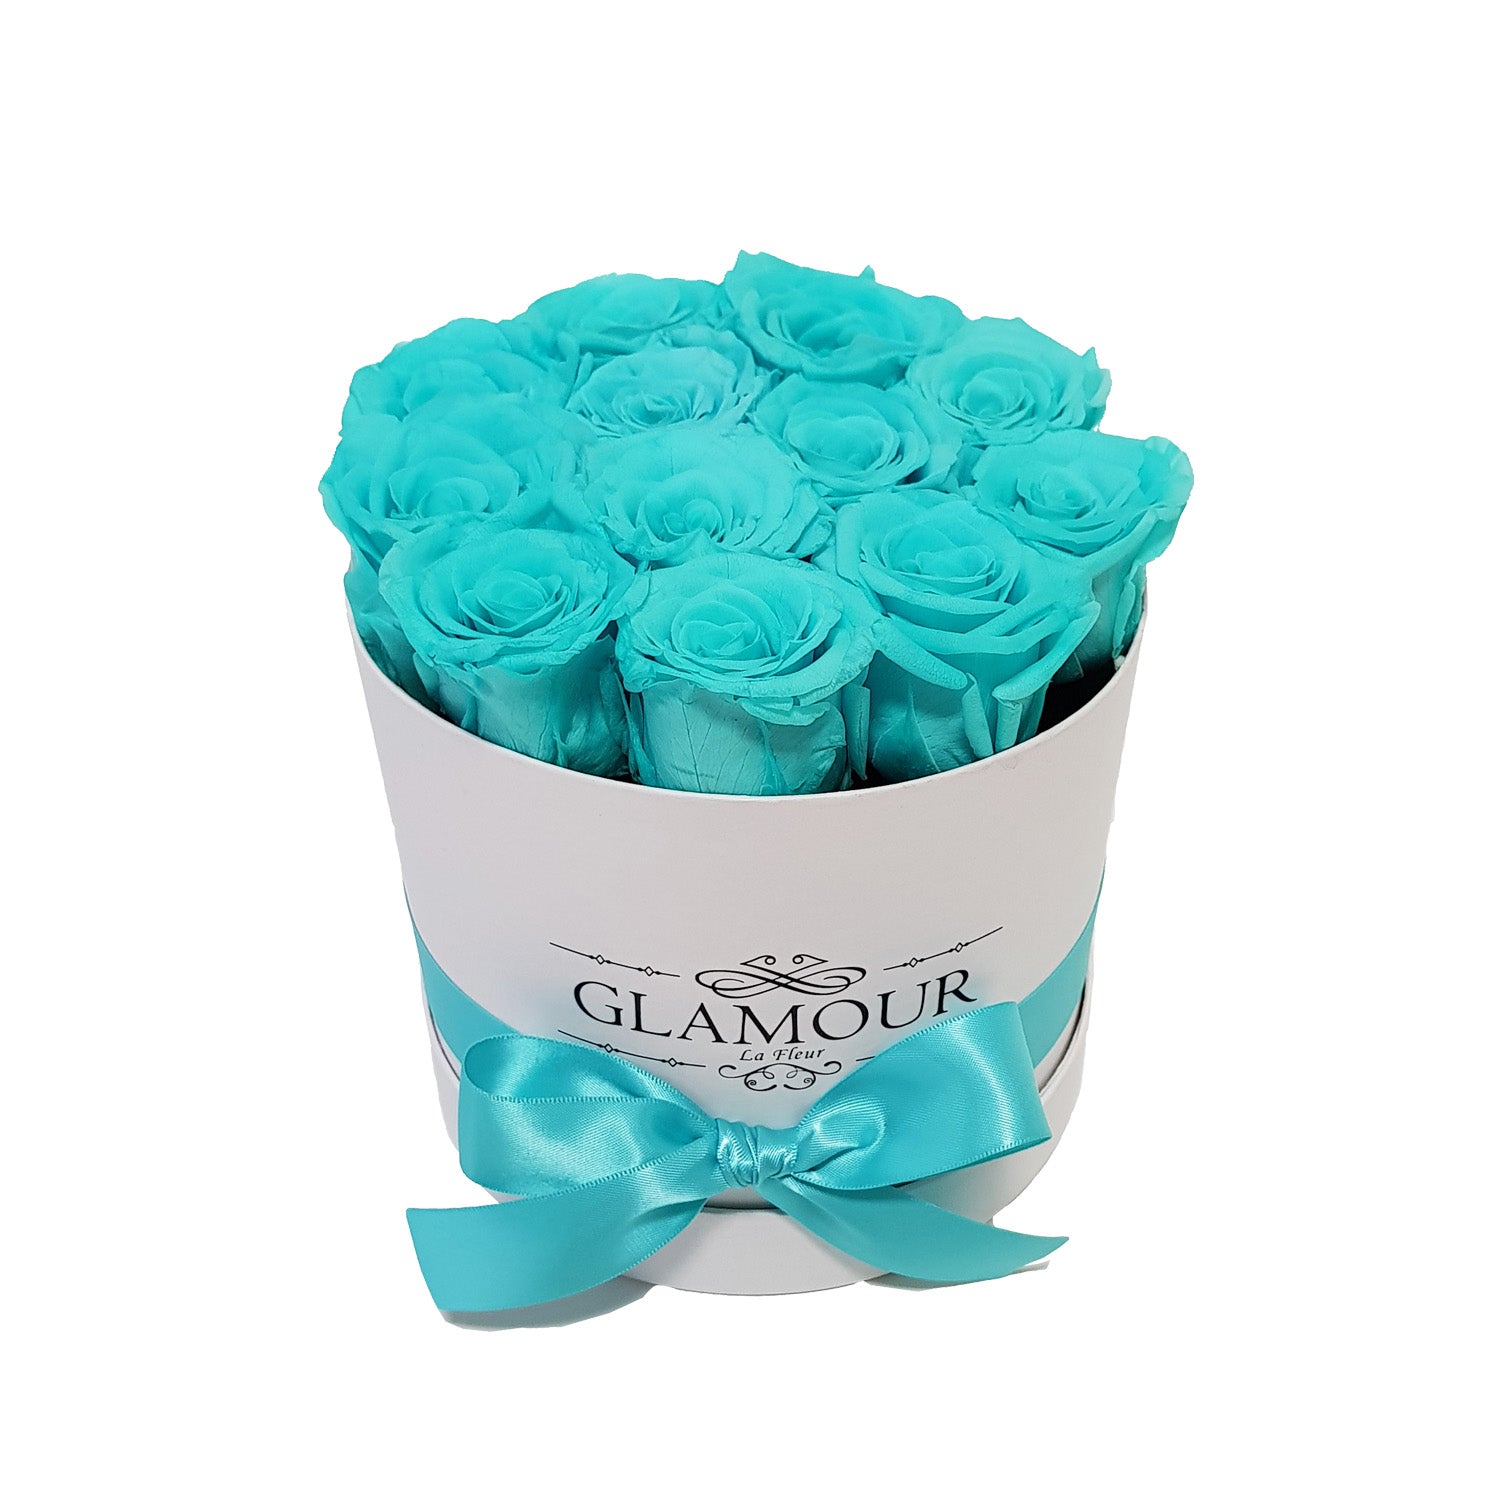 tiffany blue roses real